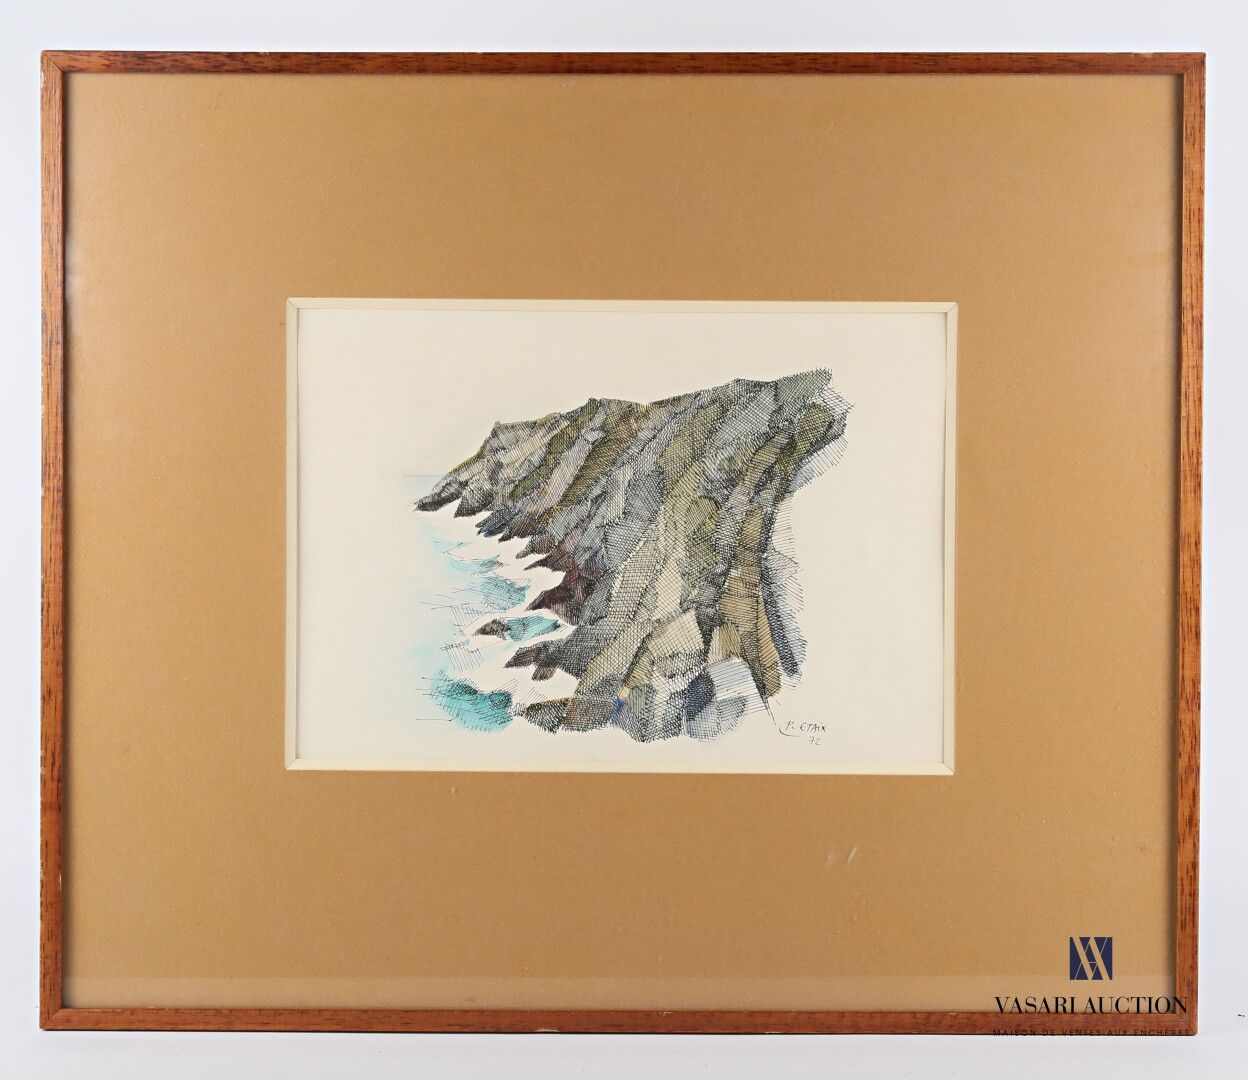 Null 埃泰克斯-皮埃尔(1928-2016)

海边的悬崖

水墨和水彩画

右下角有签名和日期72

24,5 x 35,5 cm (展示中)

有框作品